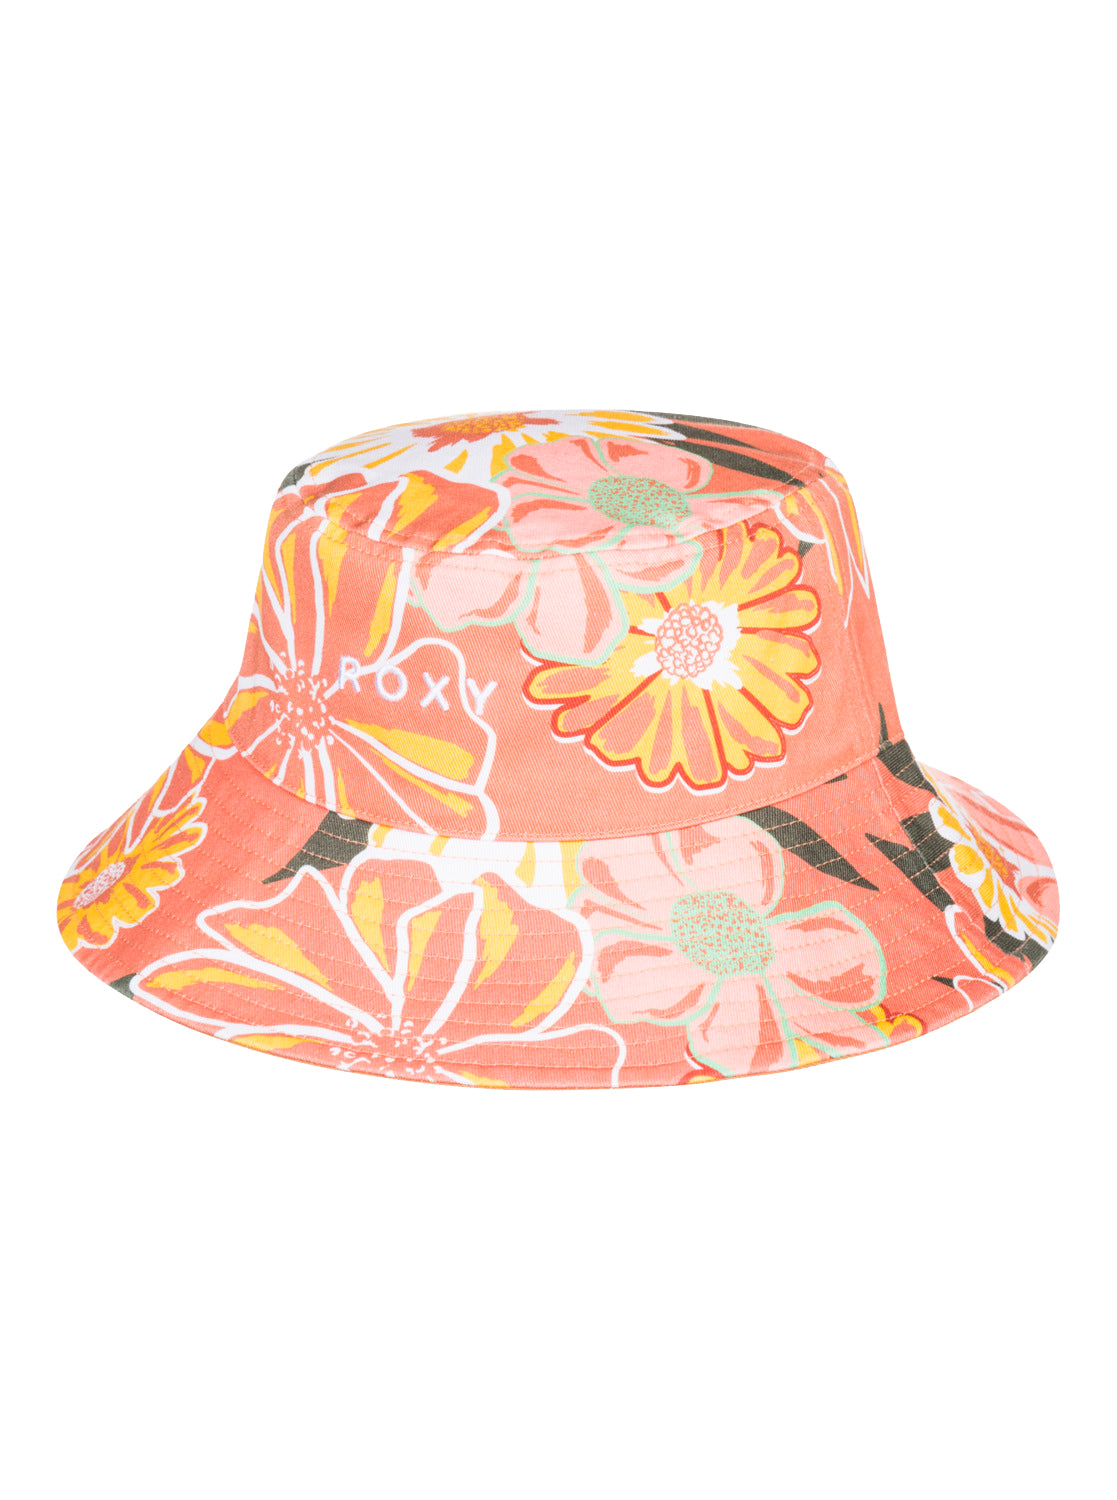 Roxy Aloha Sunshine Printed Bucket Hat  CKN8-ToastedNut M/L